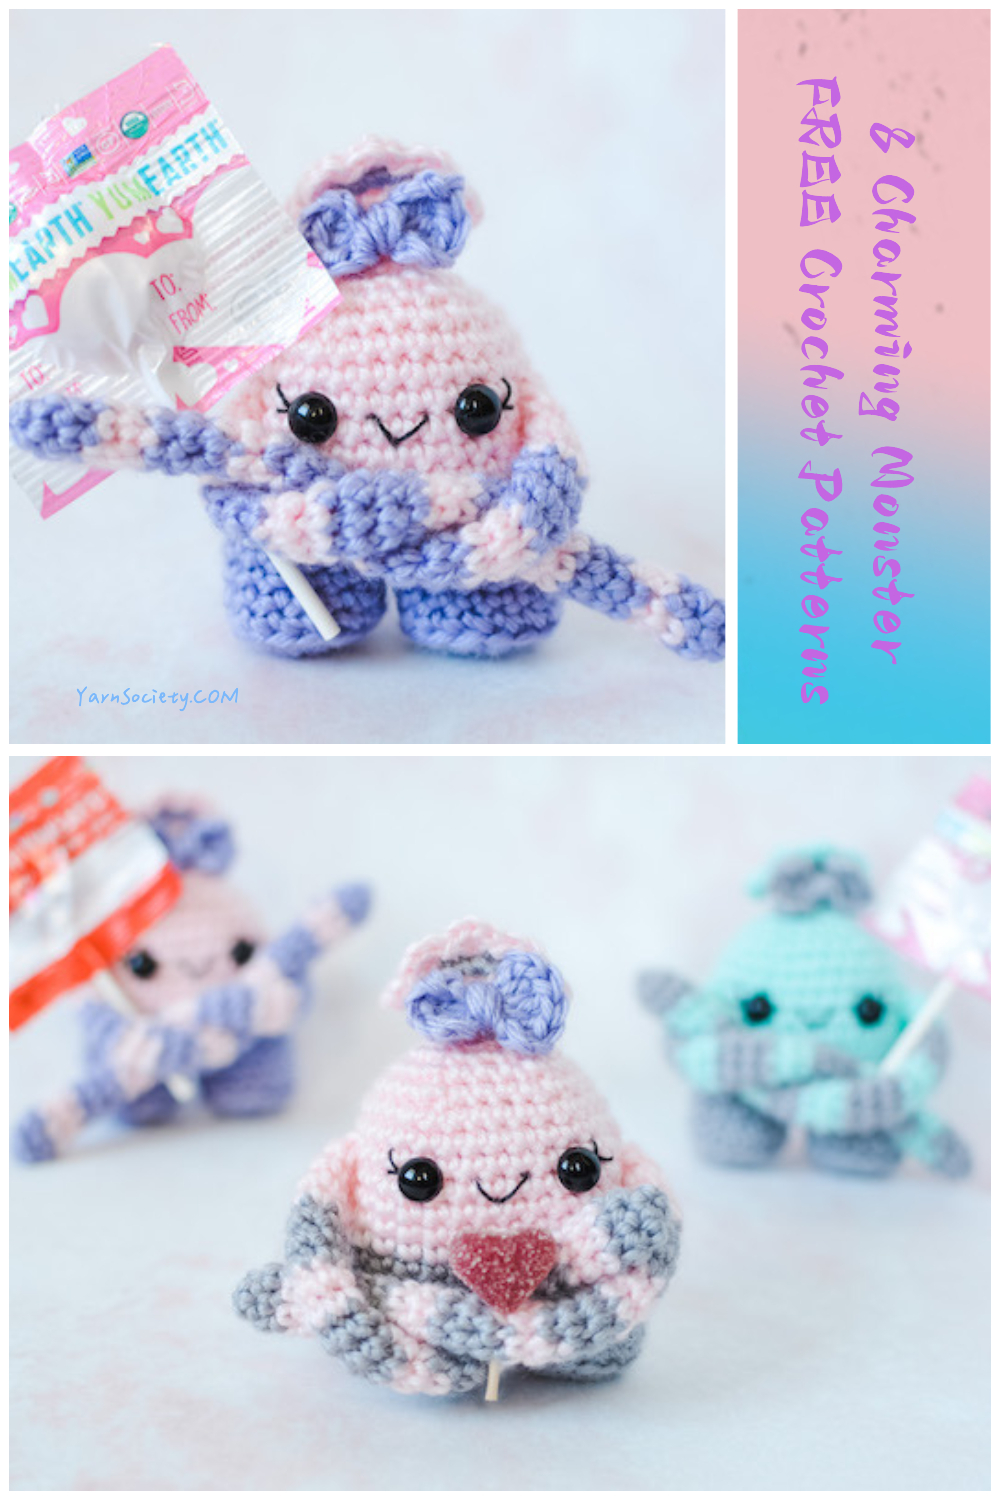  8 Charming Monster FREE Crochet Patterns